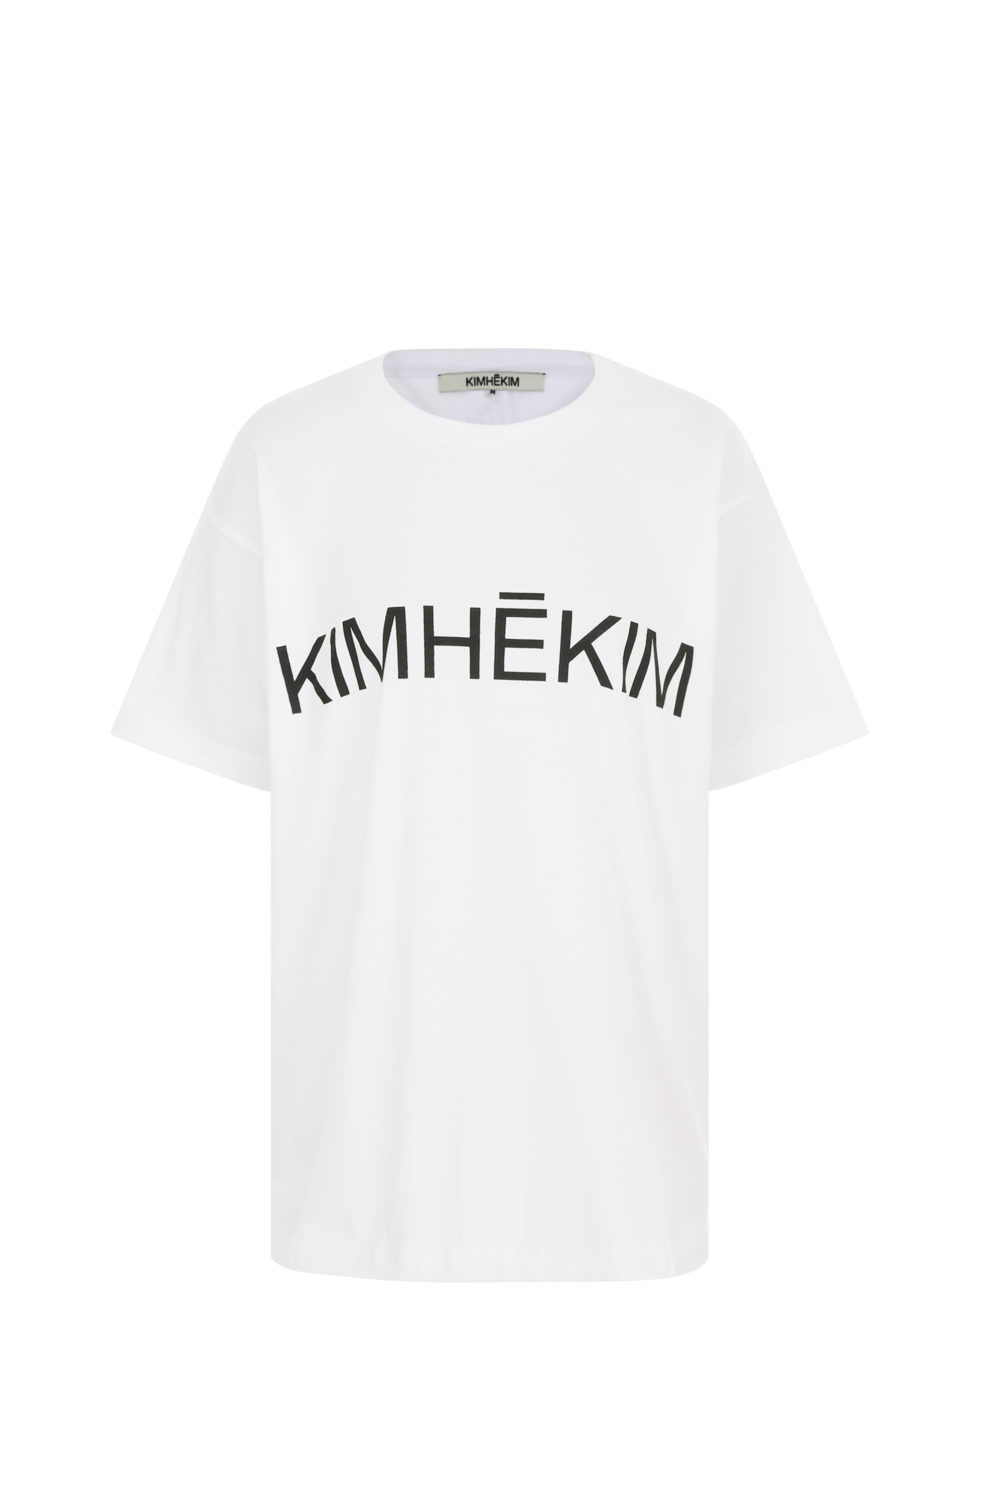 Kimhekim T-shirts